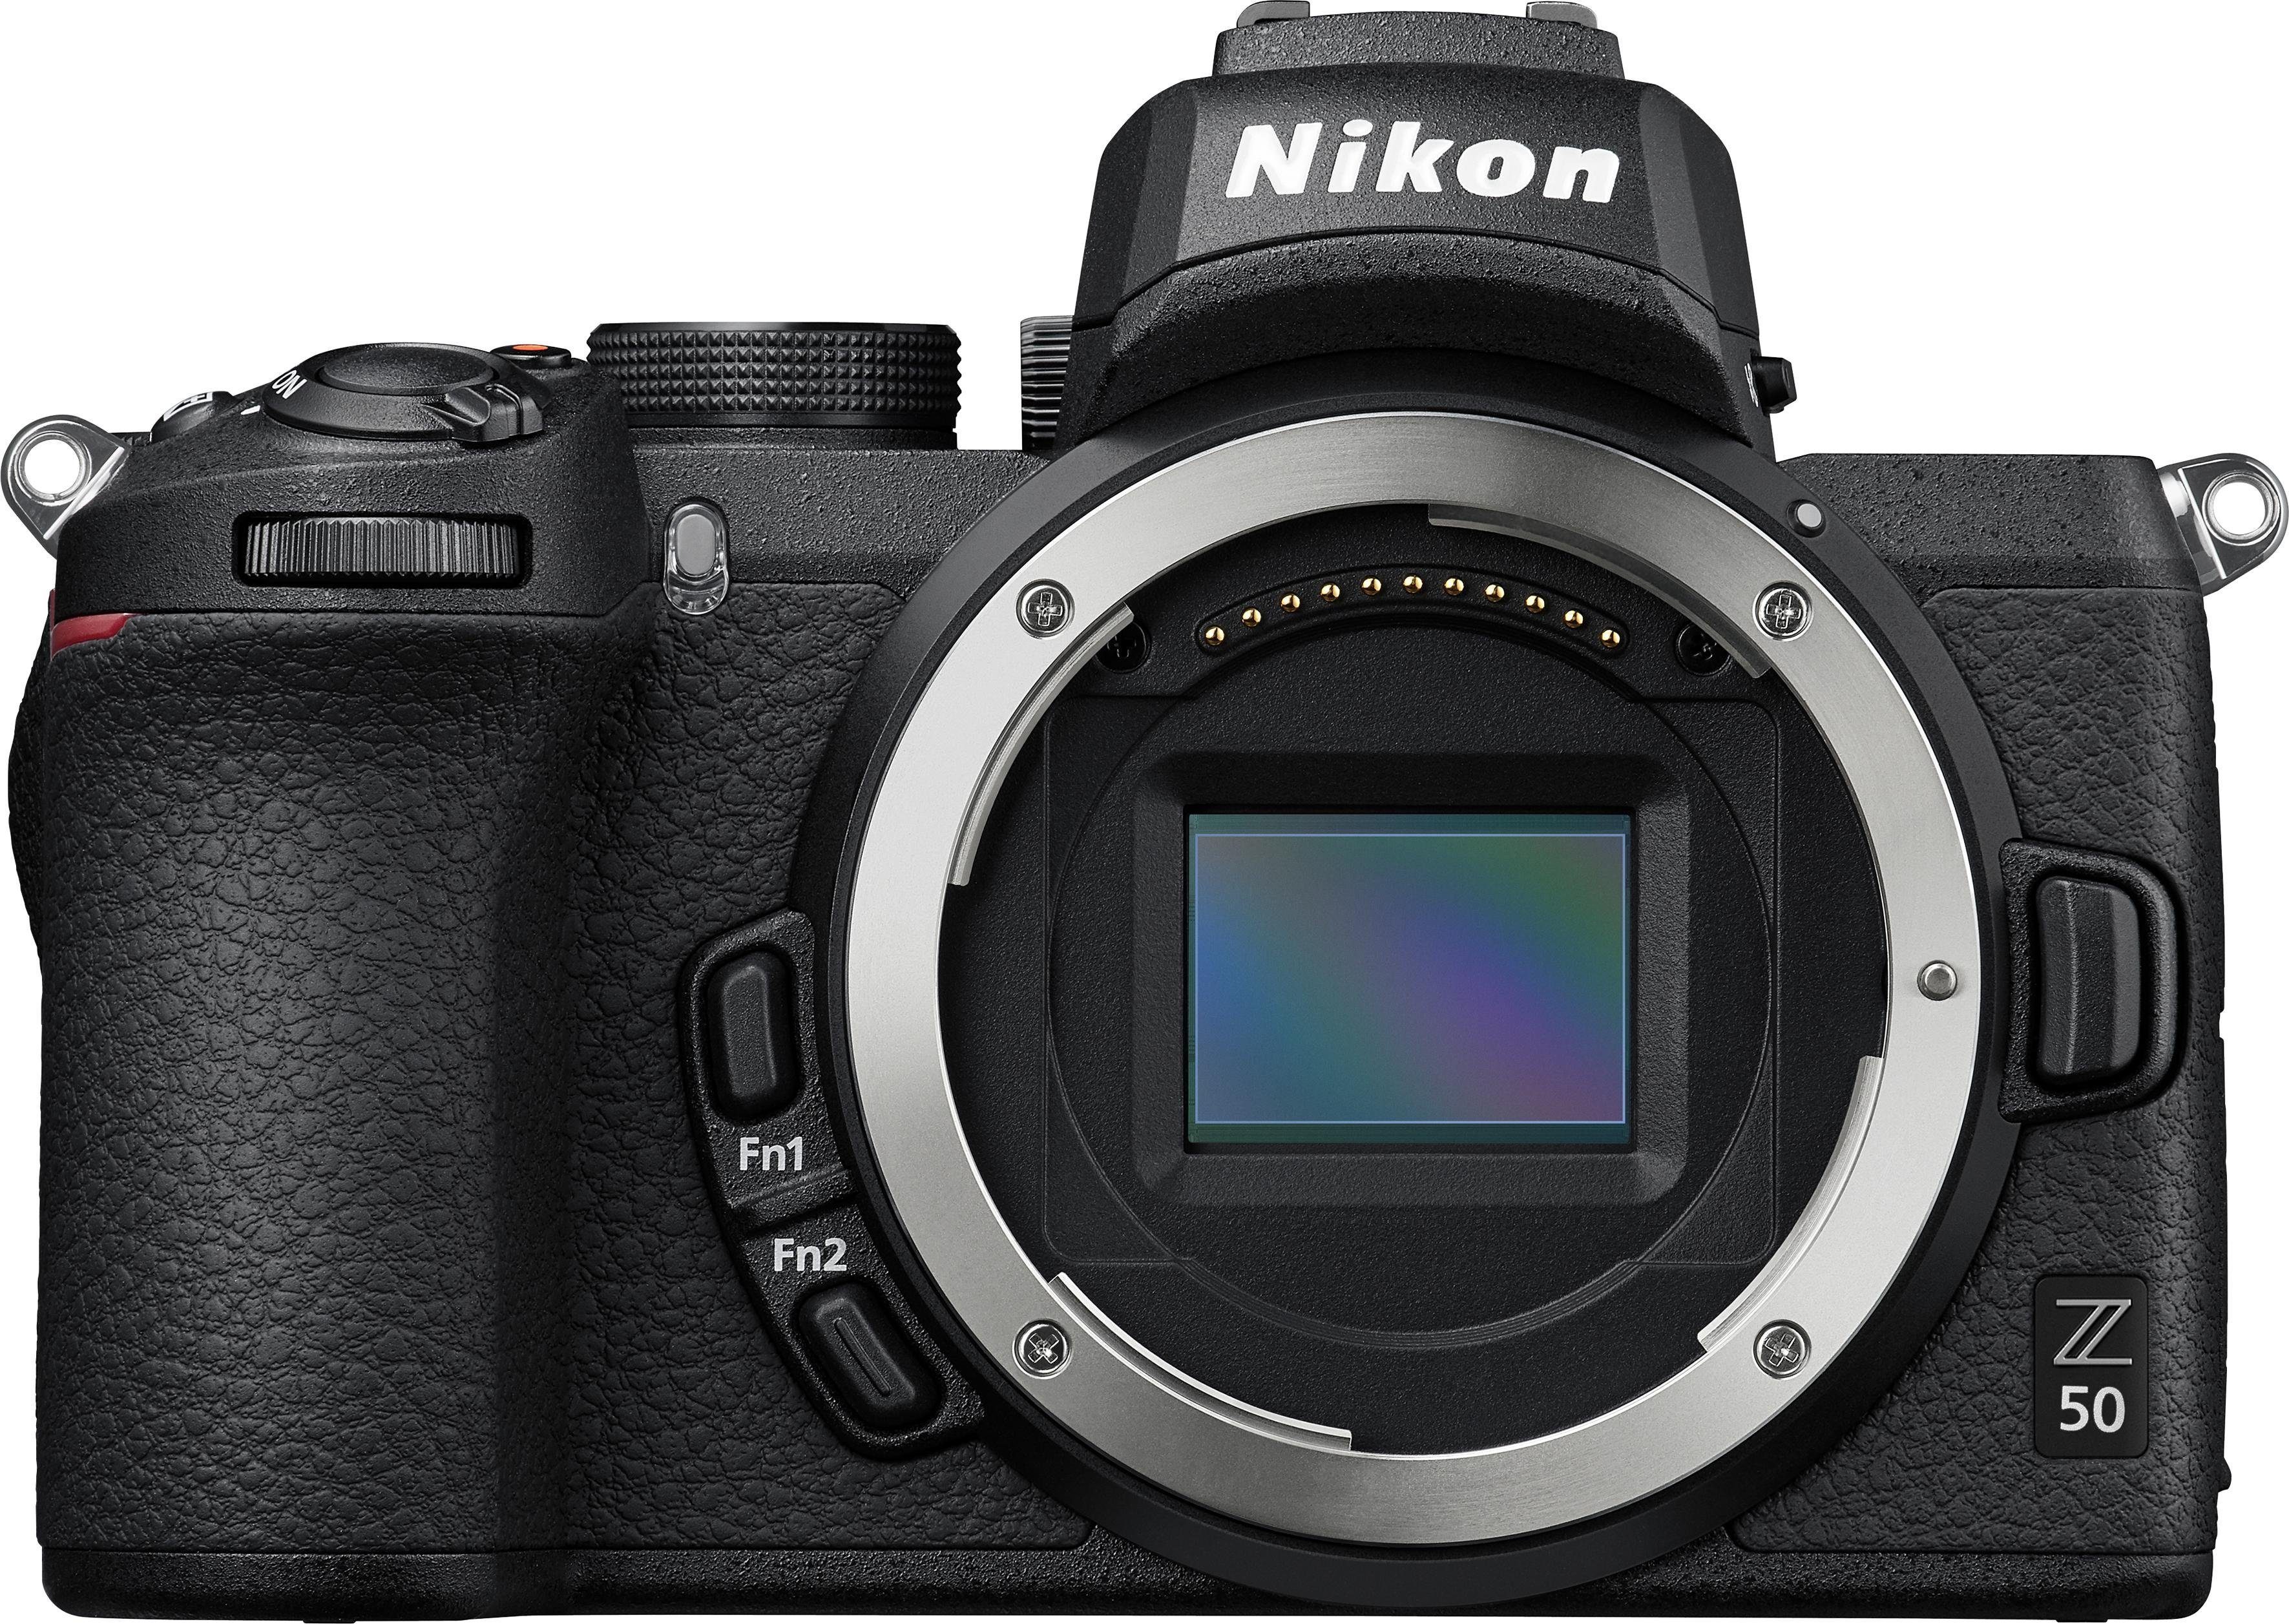 1:3.5-6.3 VR, 16-50mm DX VR 50-250mm + Z50 Bluetooth, Nikon 16-50mm DX WLAN 50-250mm 1:4.5-6.3 20,9 DX Systemkamera MP, (DX (Wi-Fi) VR,